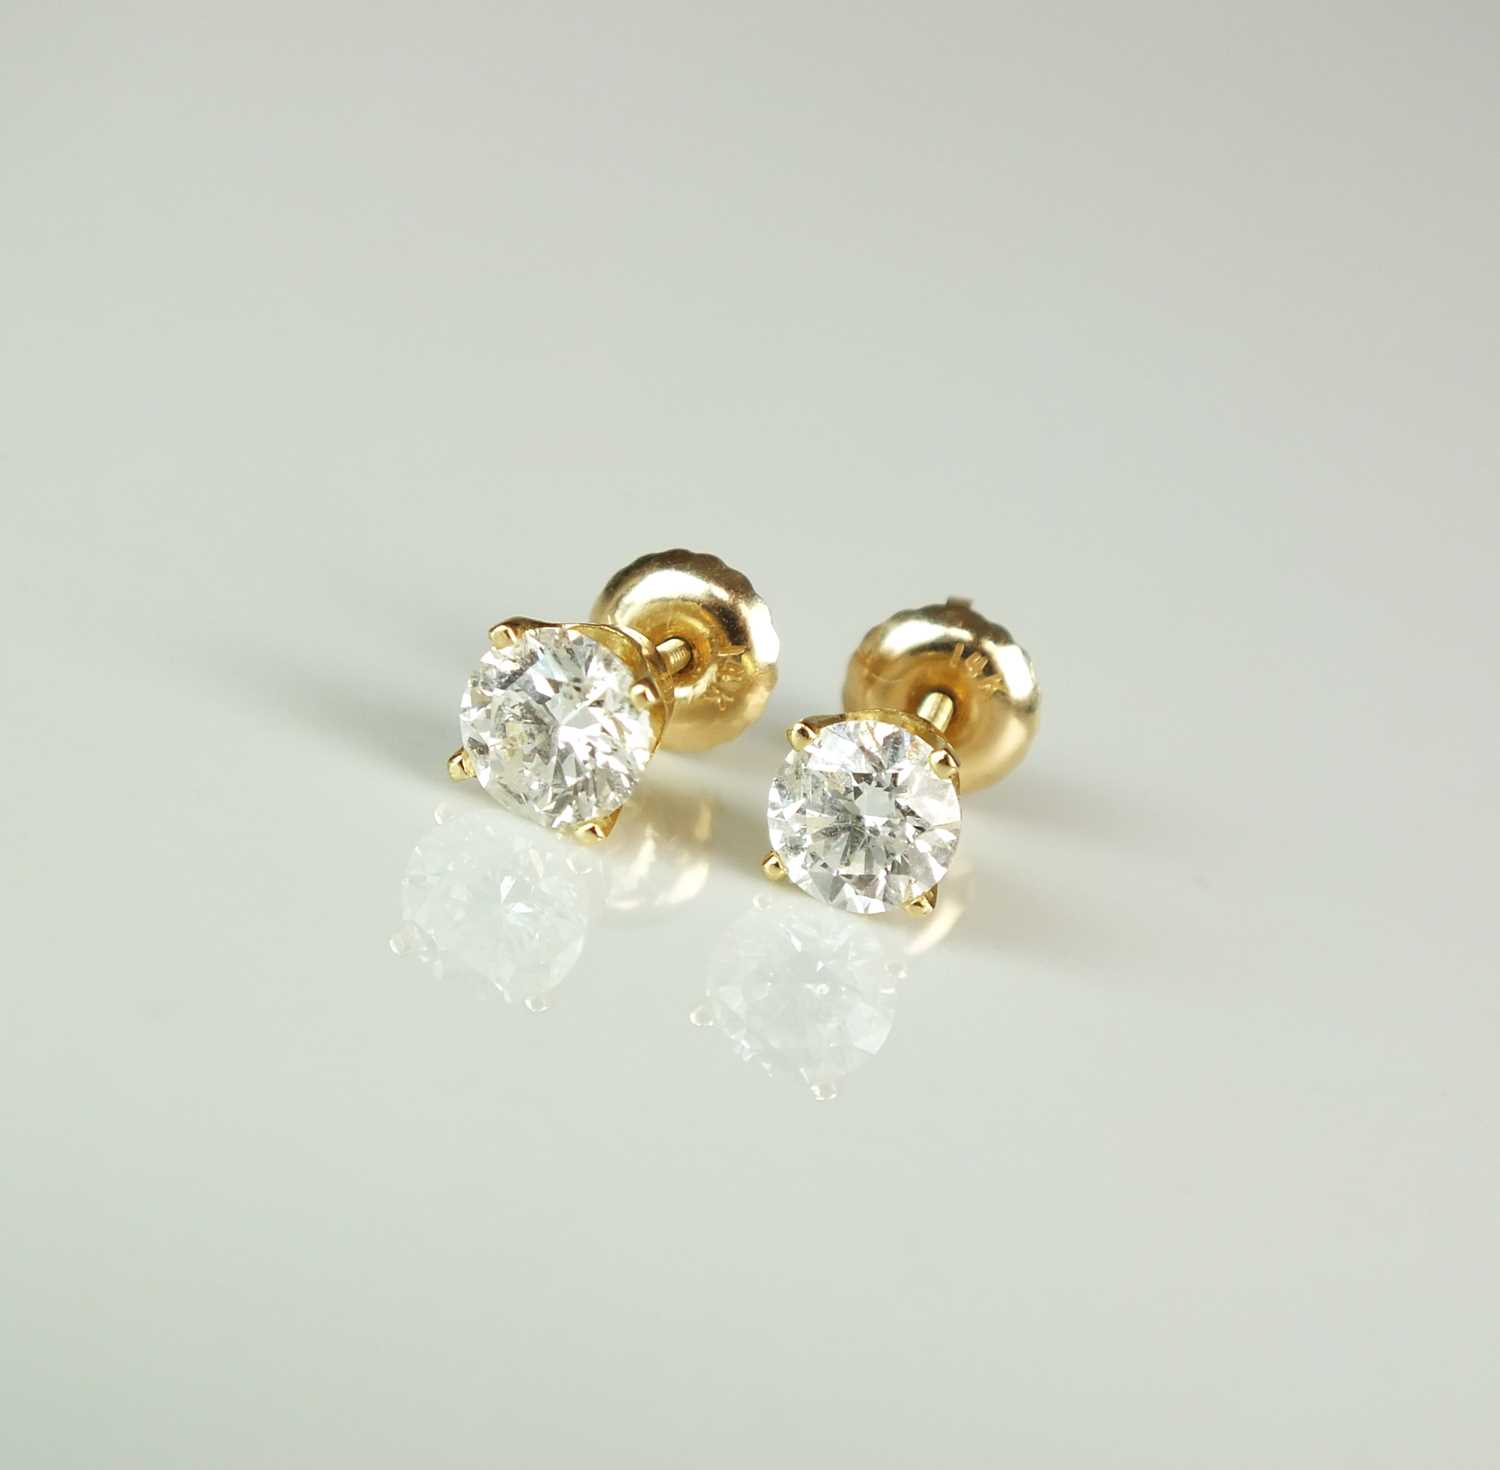 Lot 73 - A pair of diamond stud earrings